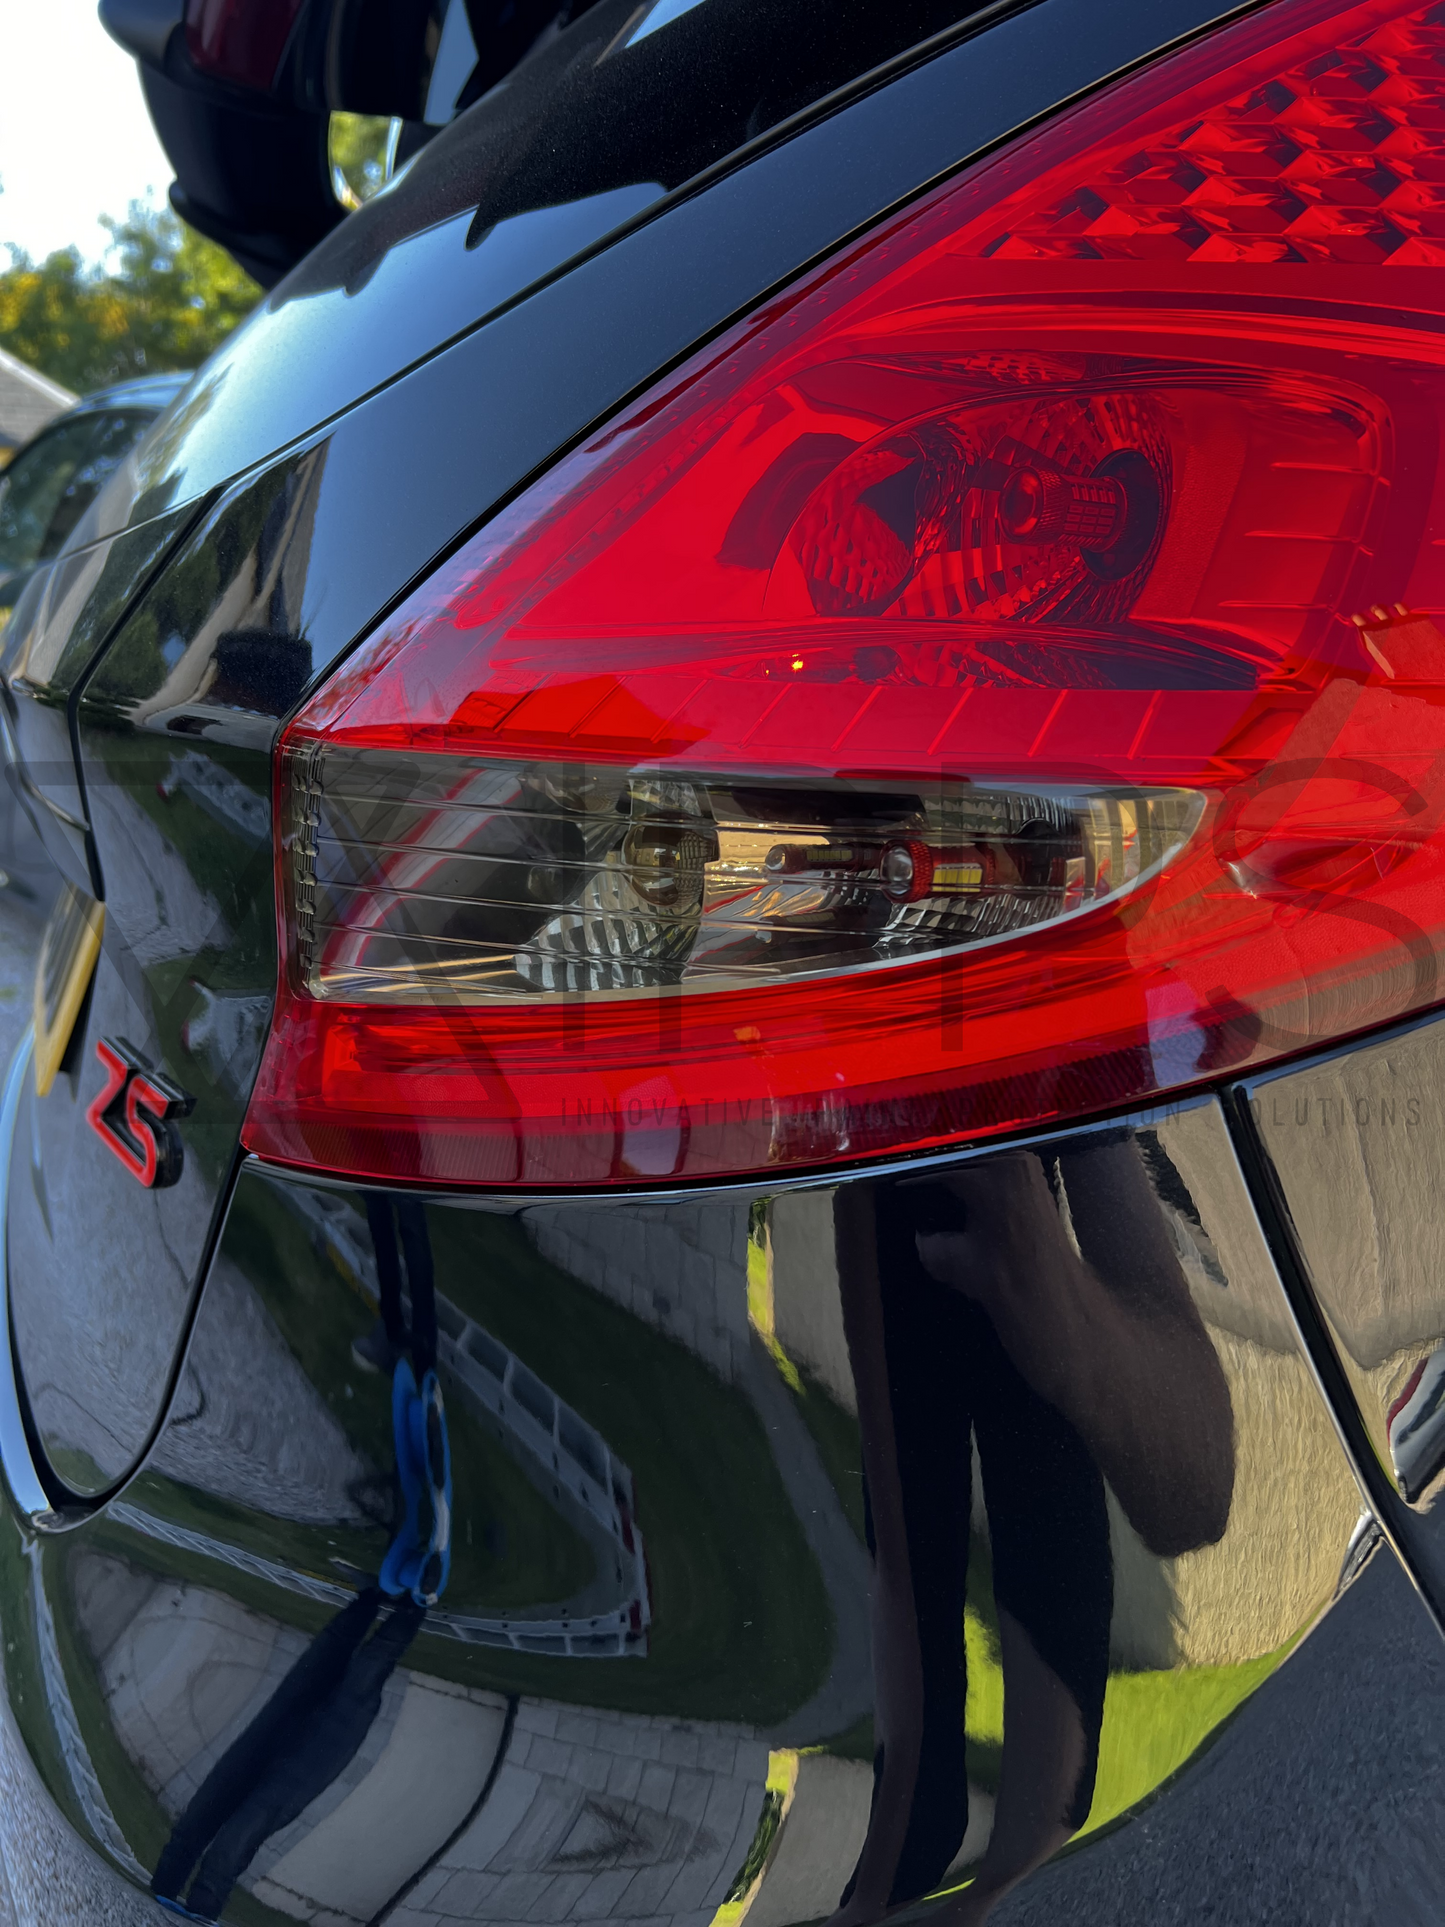 Ford Fiesta Rear Reverse Light Tint Overlays (MK7)